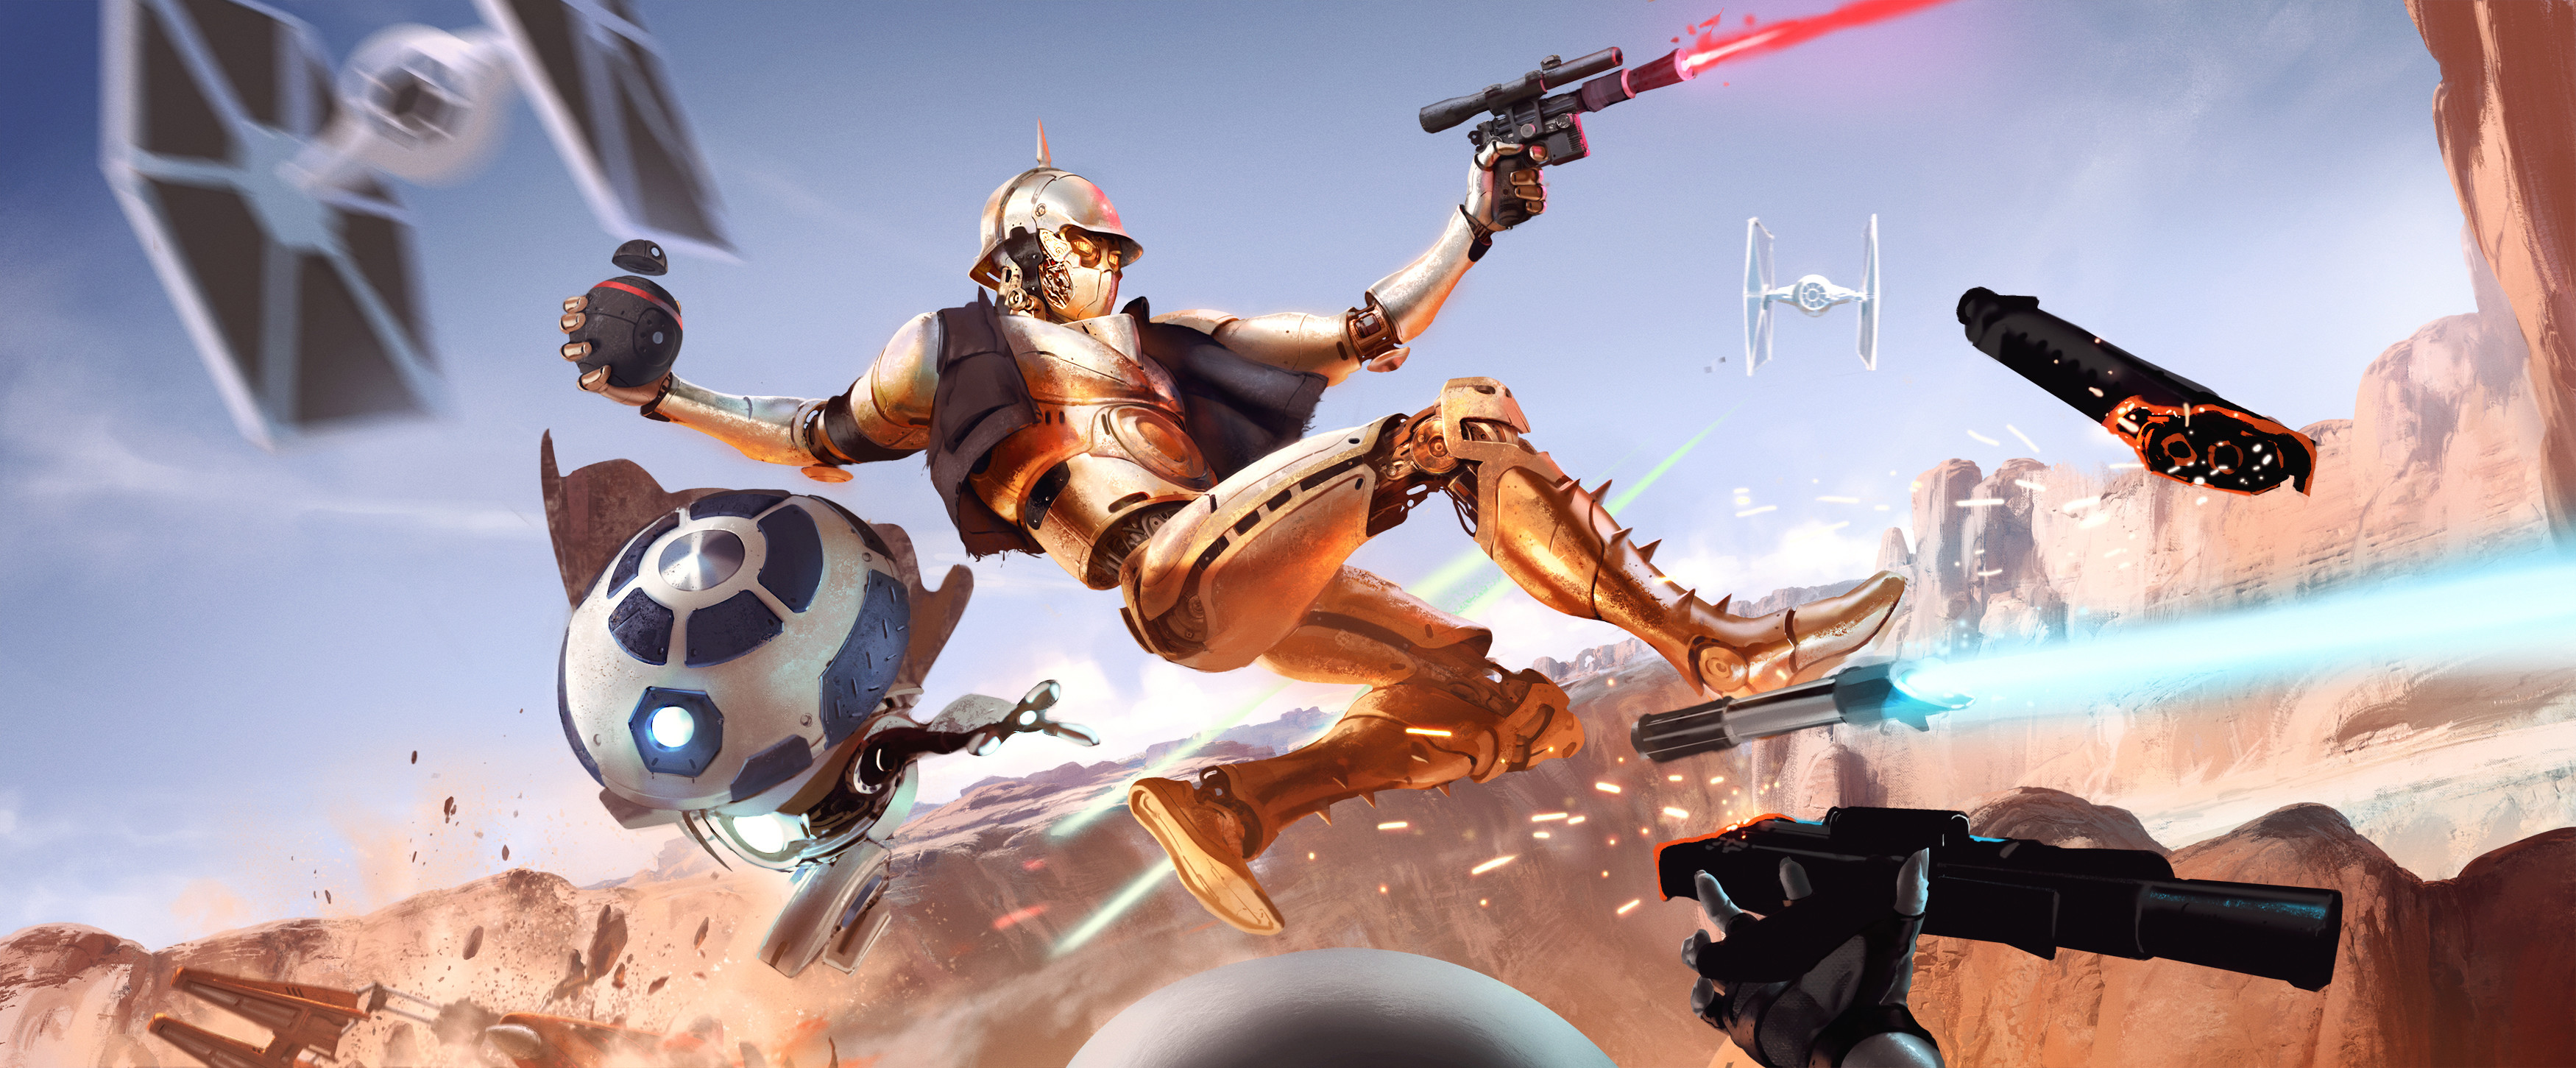 Sci Fi Star Wars C 3po R2 D2 Tie Fighter Wallpaper - Star Wars Droid Fanart - HD Wallpaper 